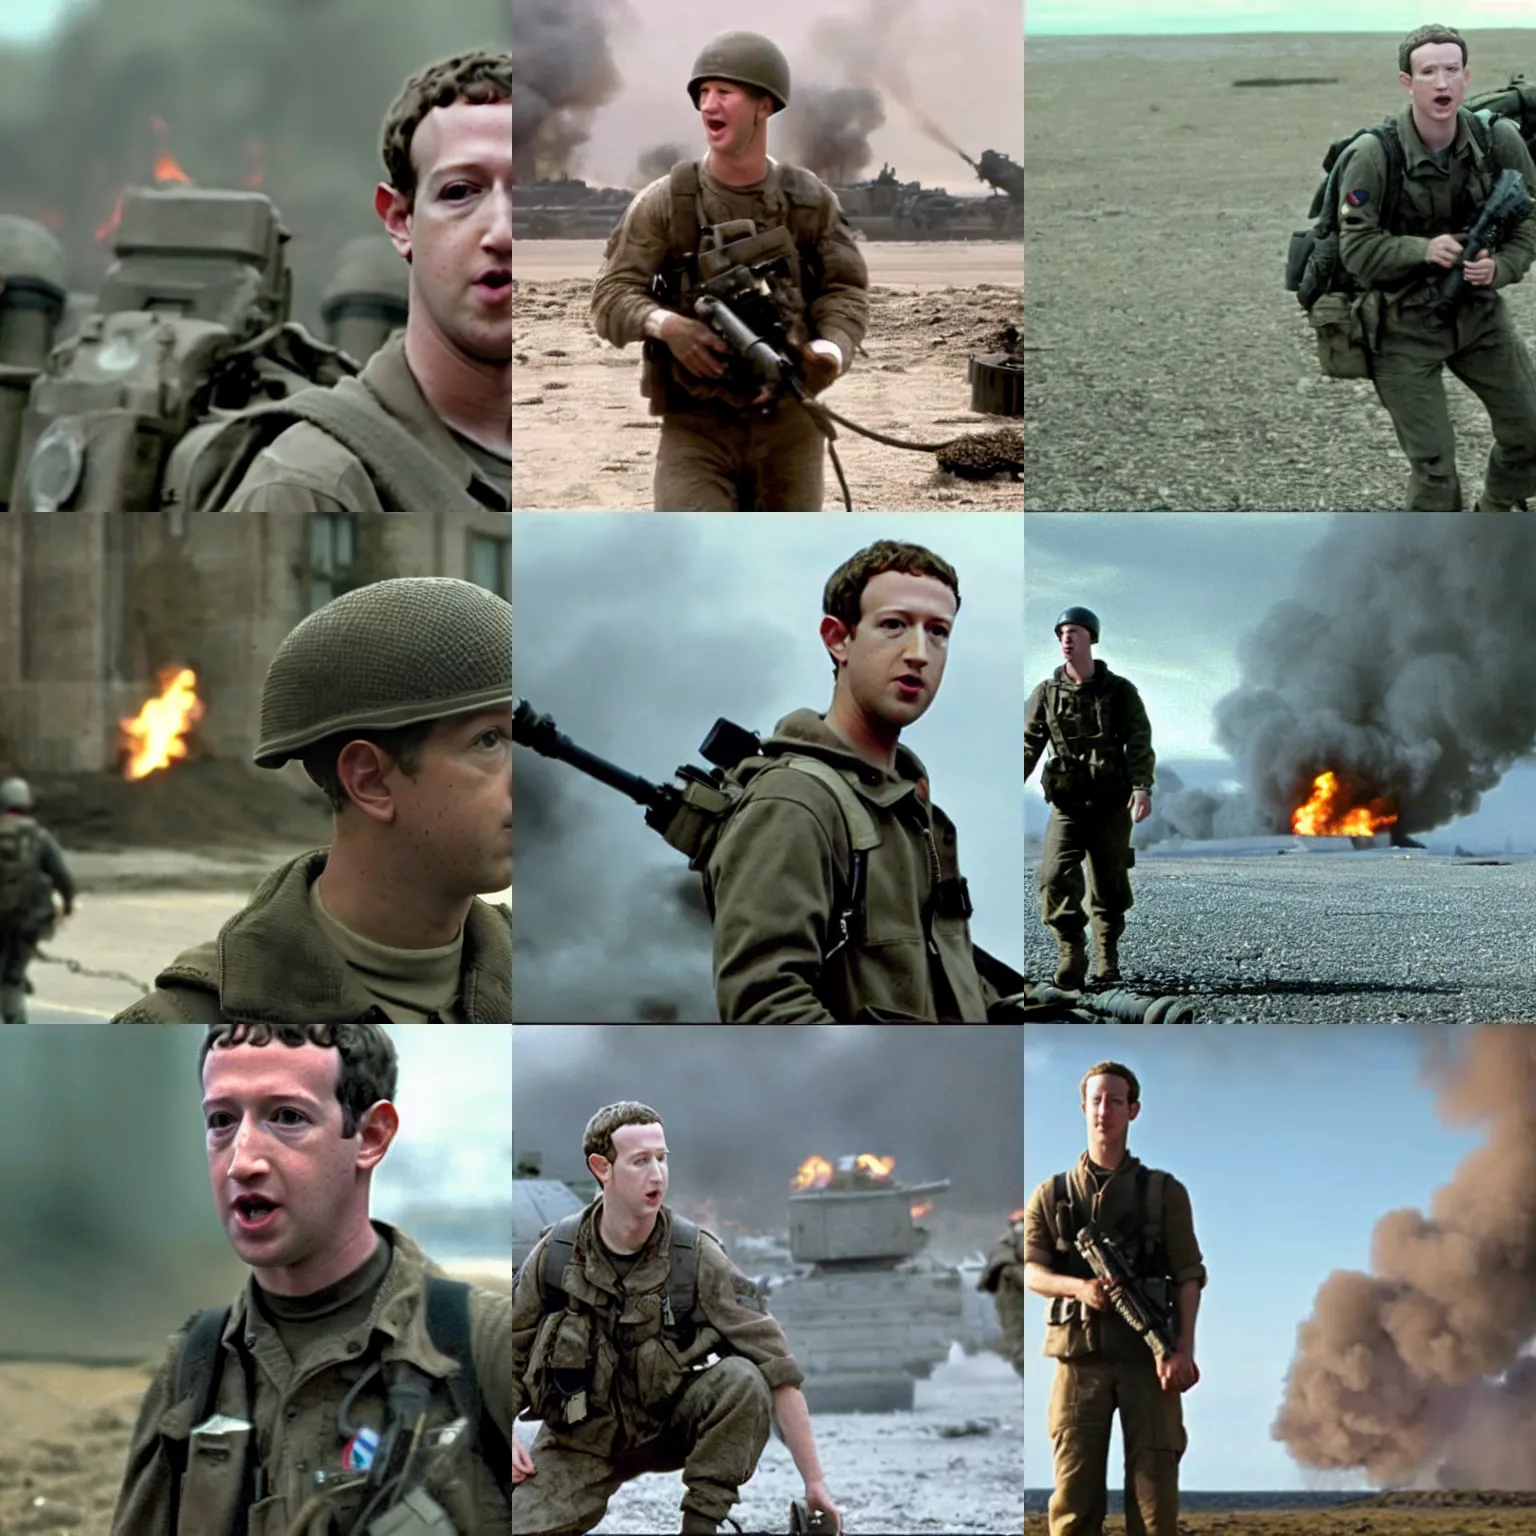 Prompt: Movie still of Mark Zuckerberg in Saving Private Ryan, establishing shot, opening scene, flamethrower